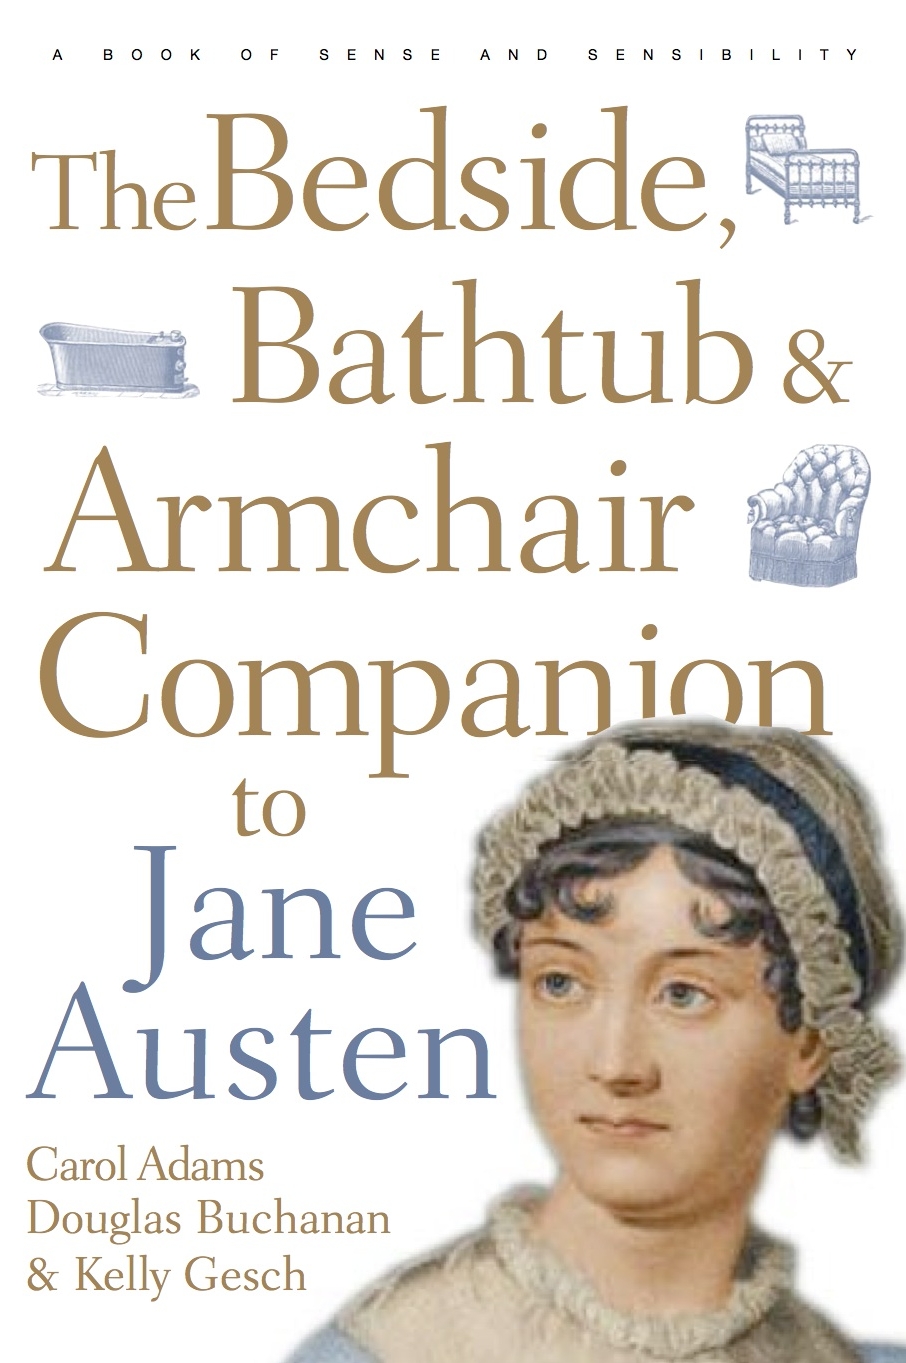 The Bedside, Bathtub & Armchair Companion to Jane Austen